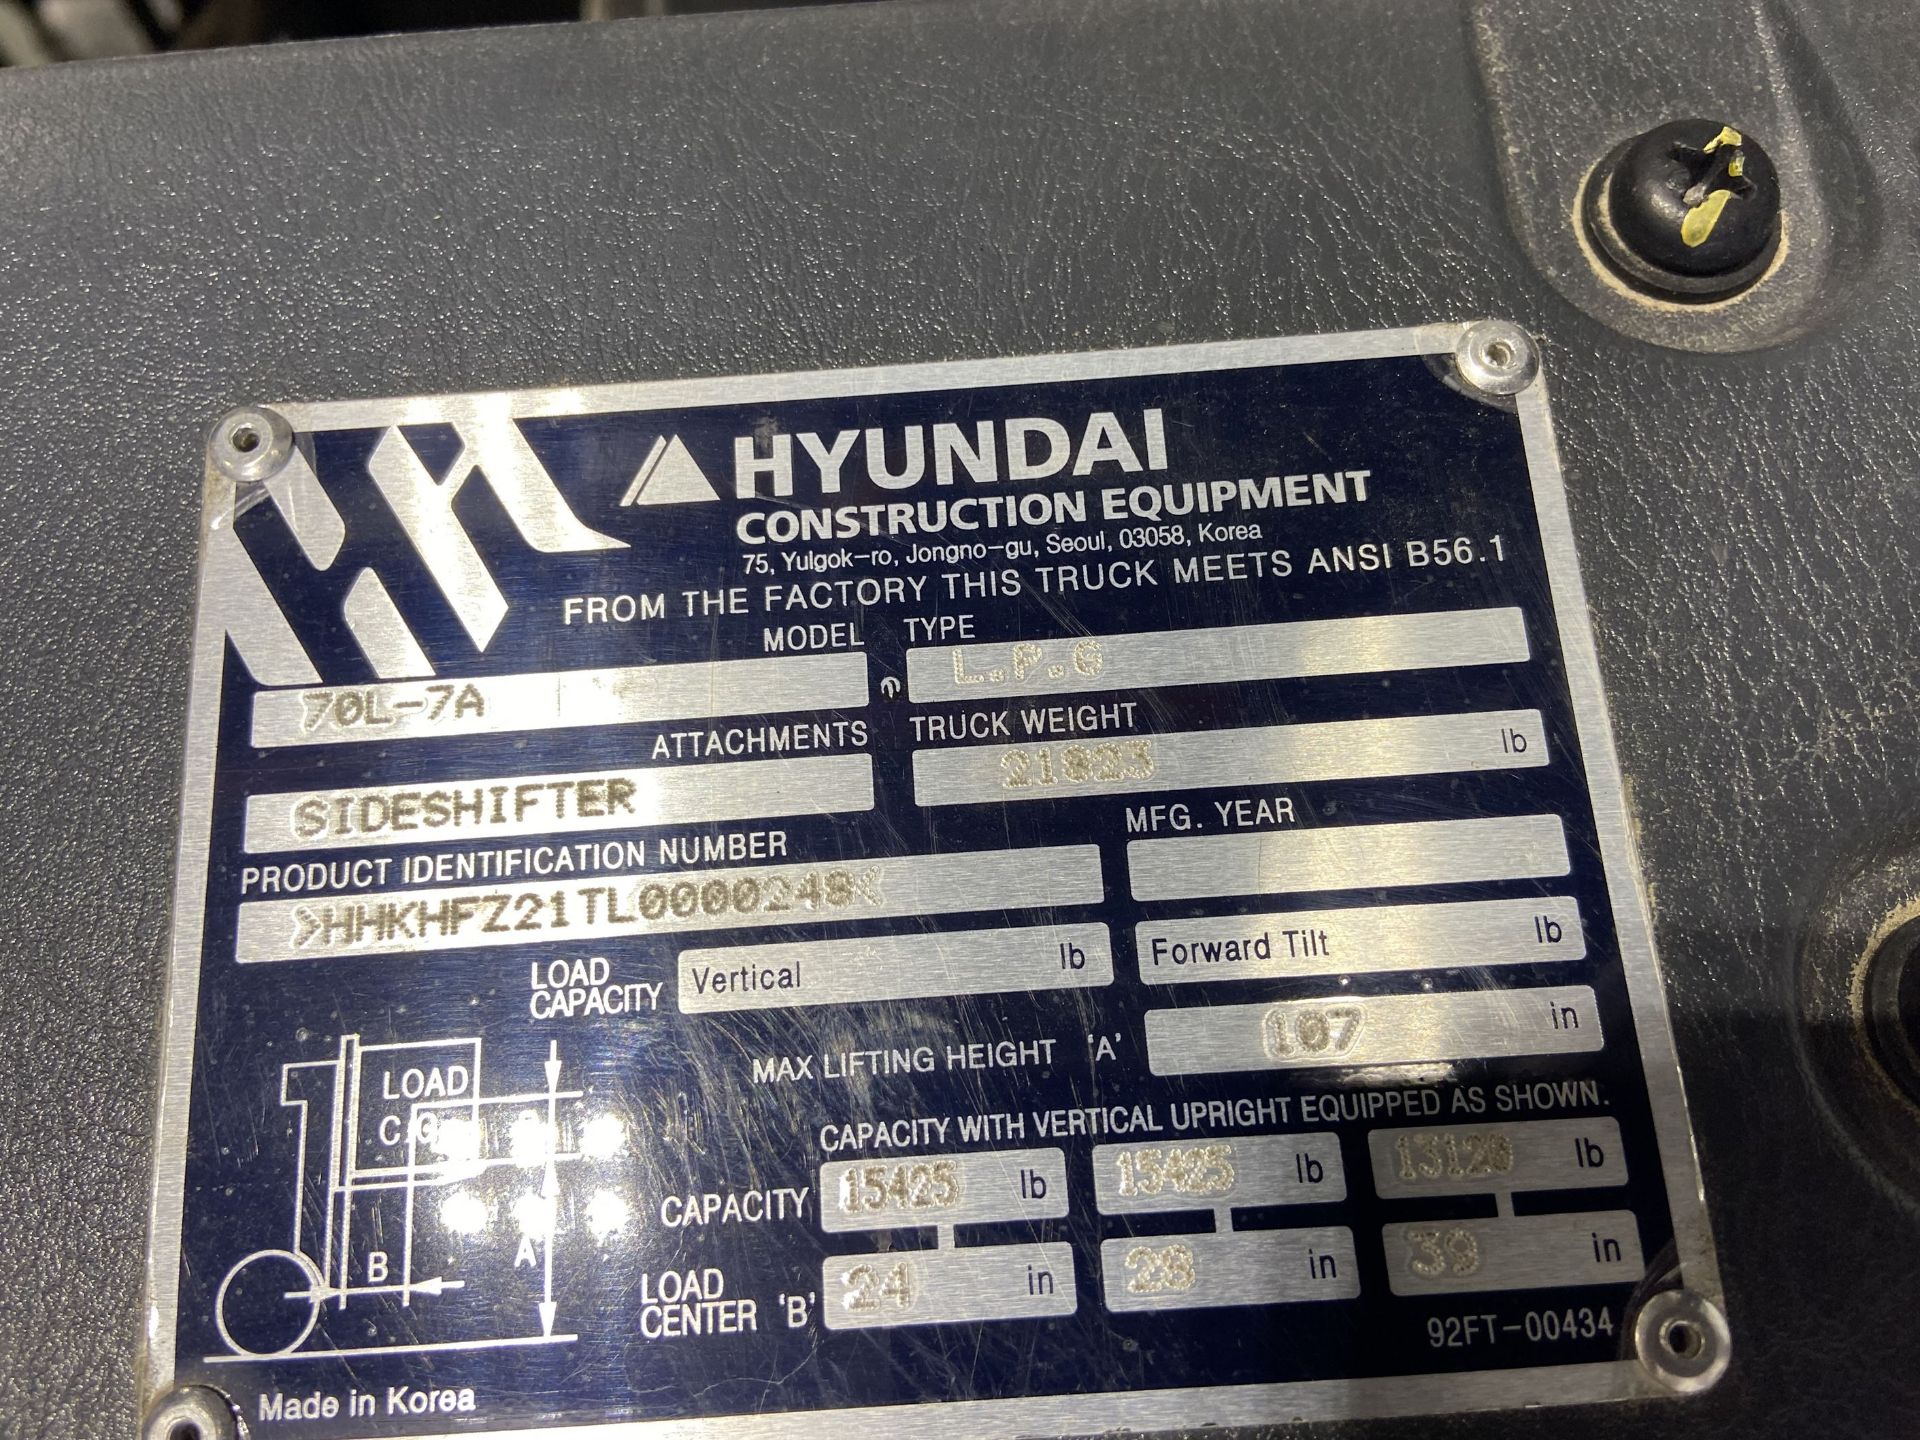 HYUNDAI 70L-7A 15,425 Lb LP Forklift, s/n HHKHFZ21TL0000248, w/ Side Shifter, 107" Lift, 8' - Image 6 of 10